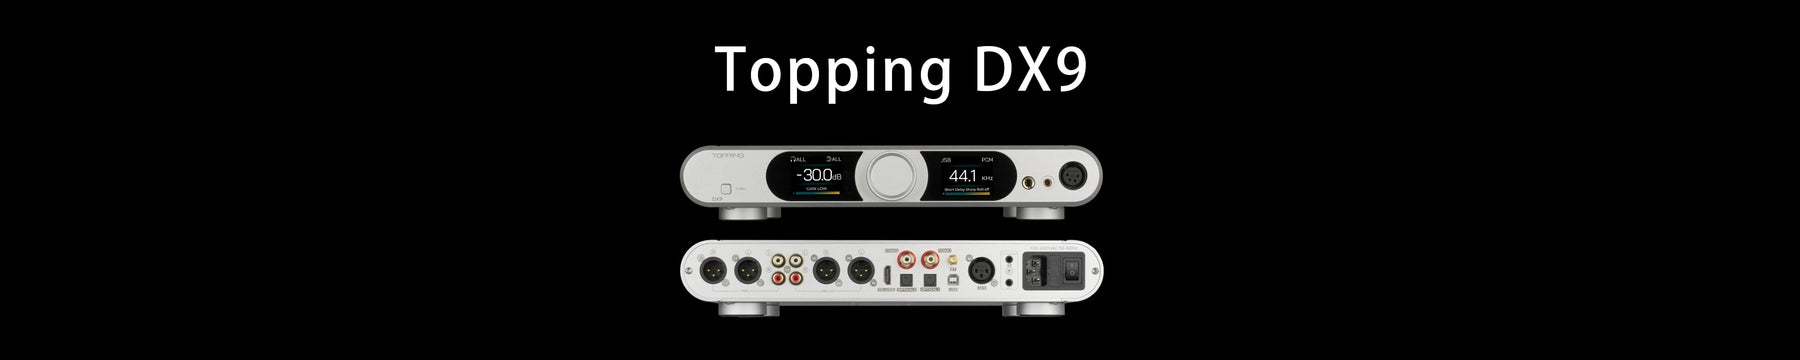 Topping DX9 15th Anniversary Flagship Desktop DAC/AMP